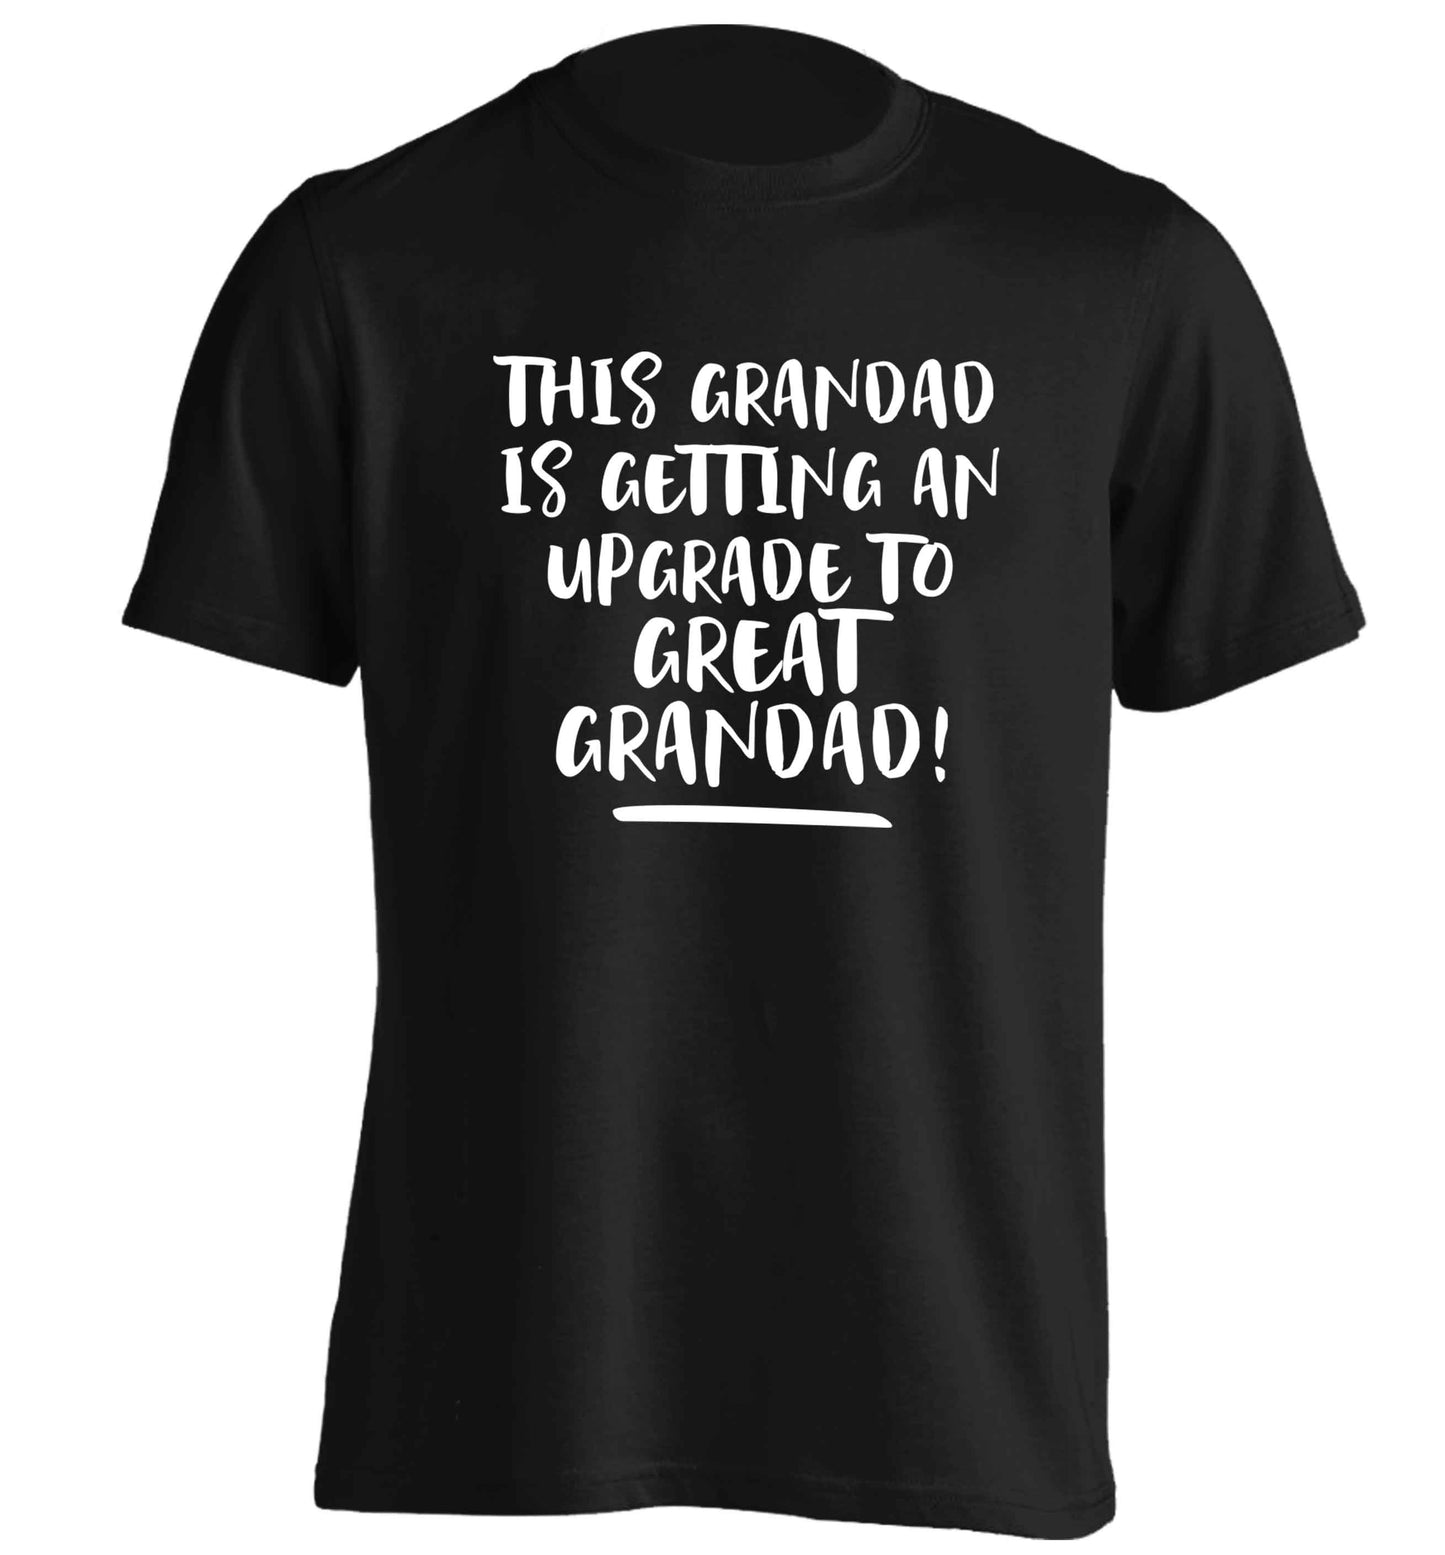 This grandad is getting an upgrade to great grandad! adults unisex black Tshirt 2XL